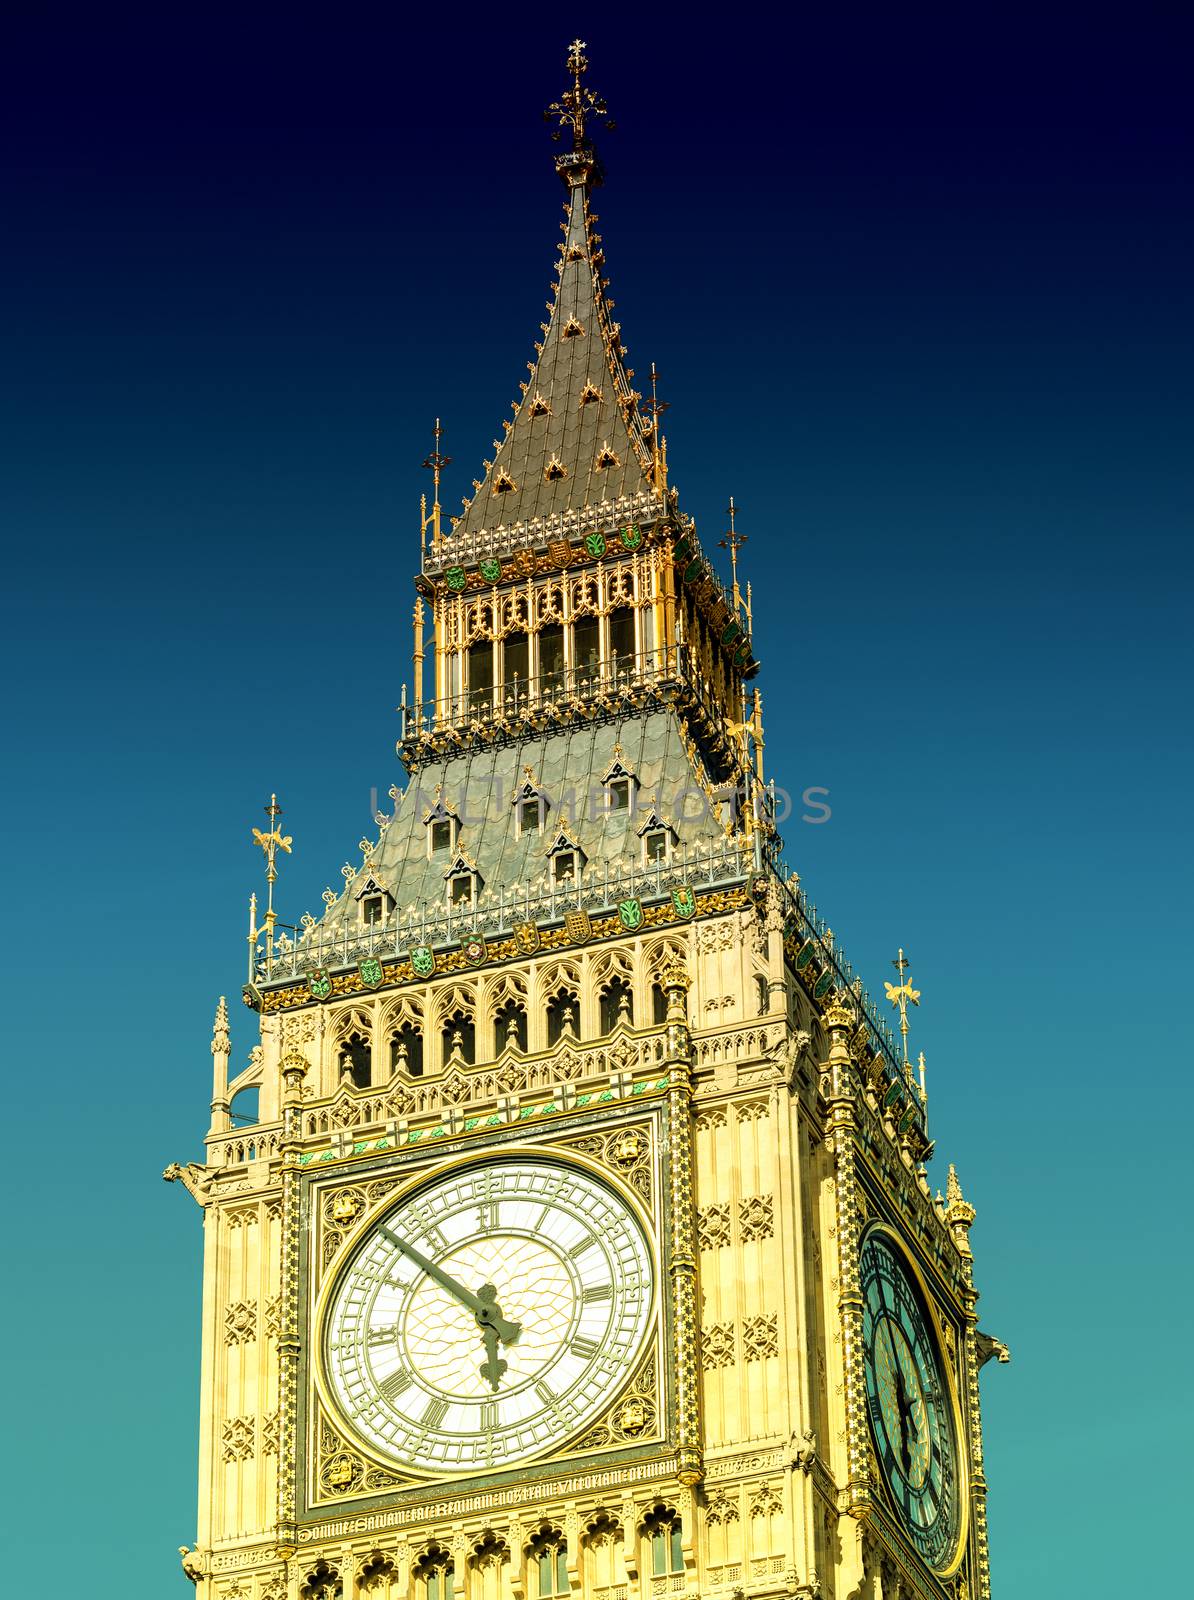 Big Ben Tower in London against blue sky by jovannig